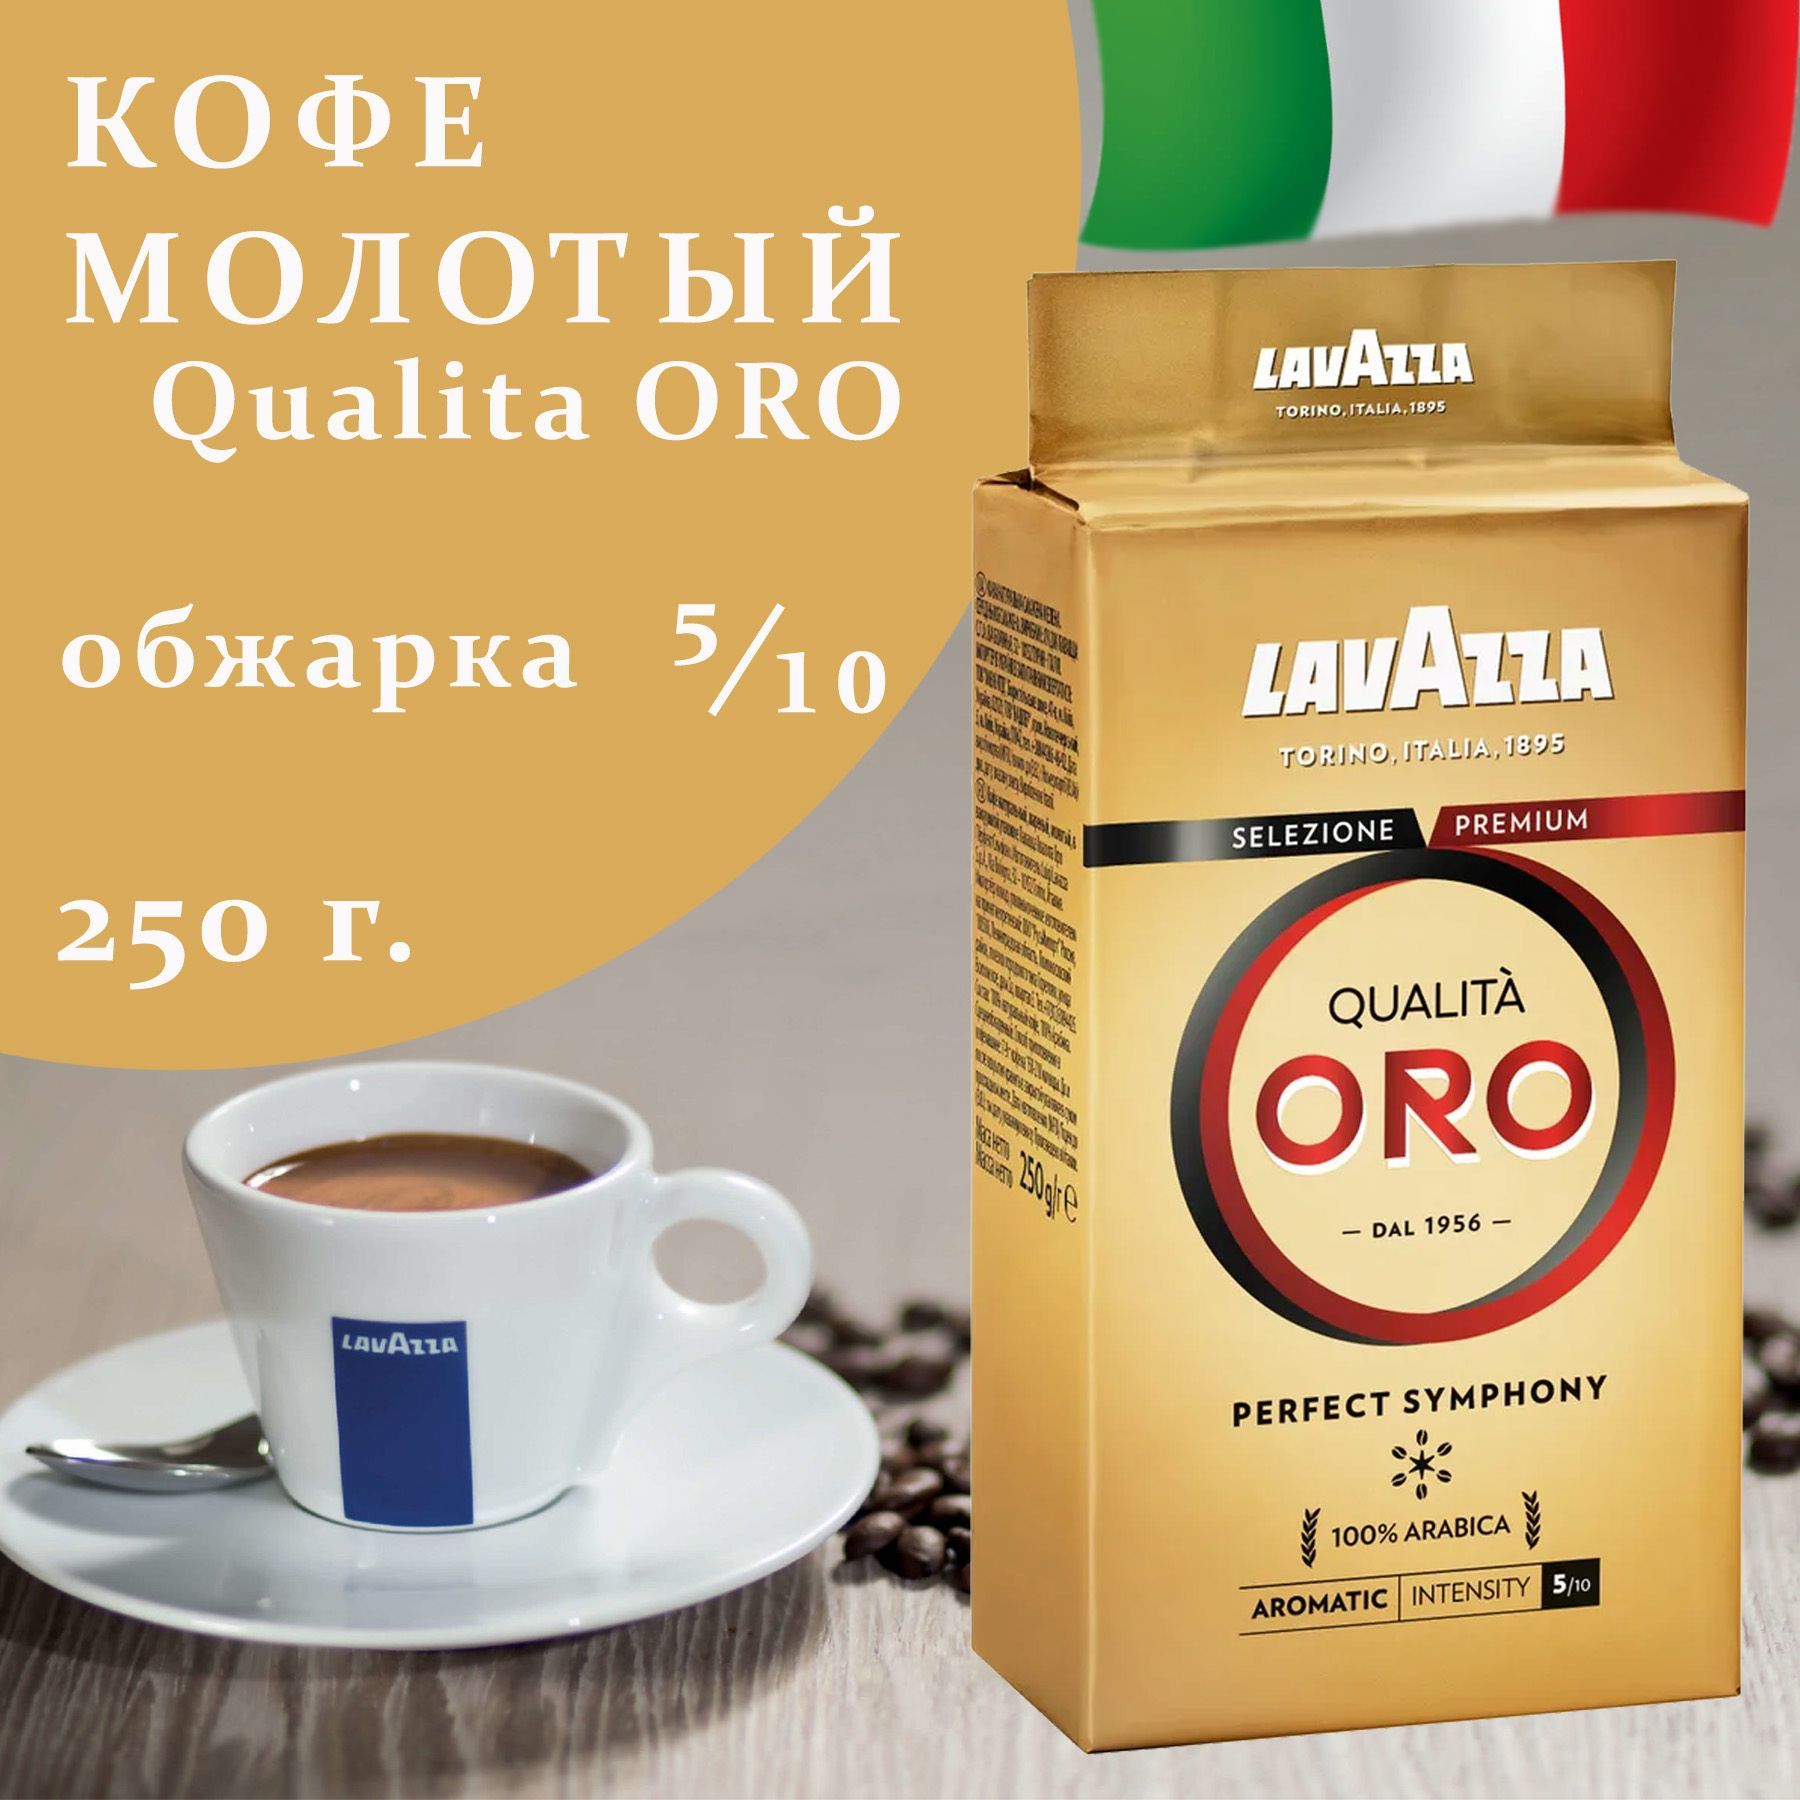 Кофе qualita oro молотый. Oro итальянский кофе. Капсулы Lavazza qualita Oro.